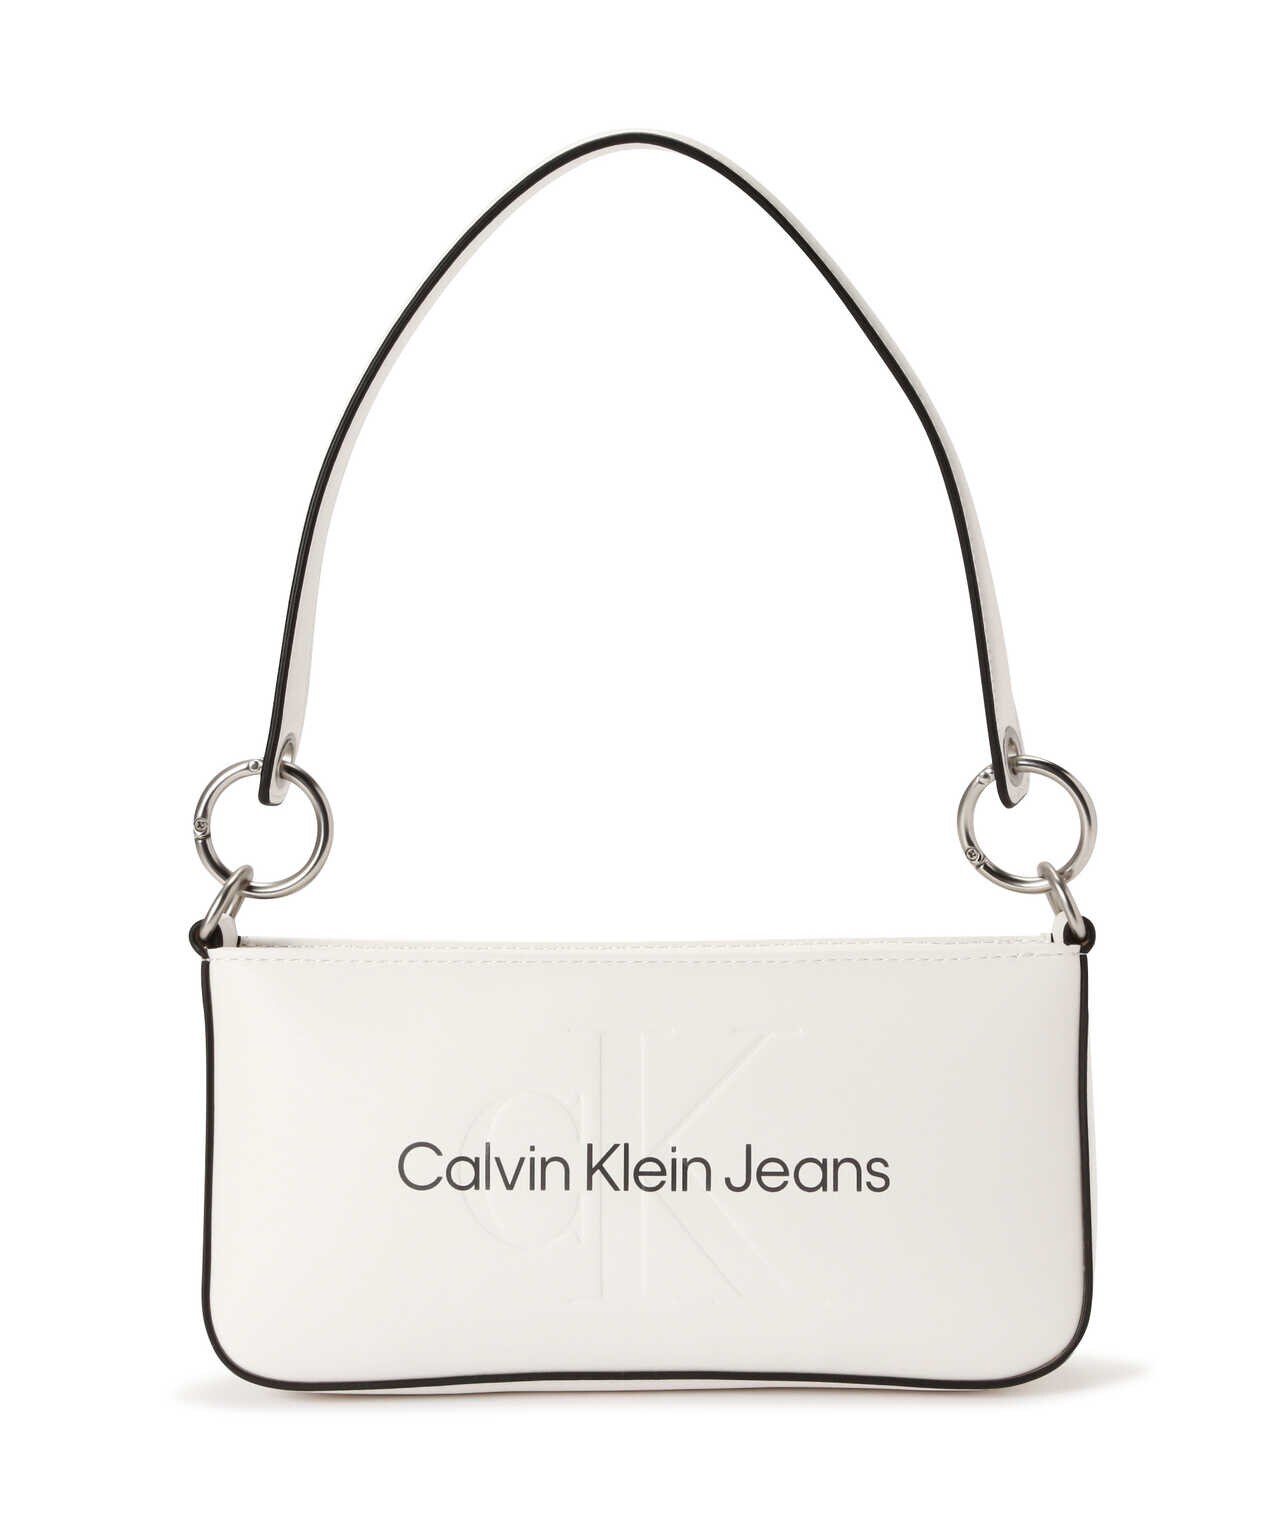 Calvin Klein Jeans（カルバンクラインジーンズ）スカルプチャー 